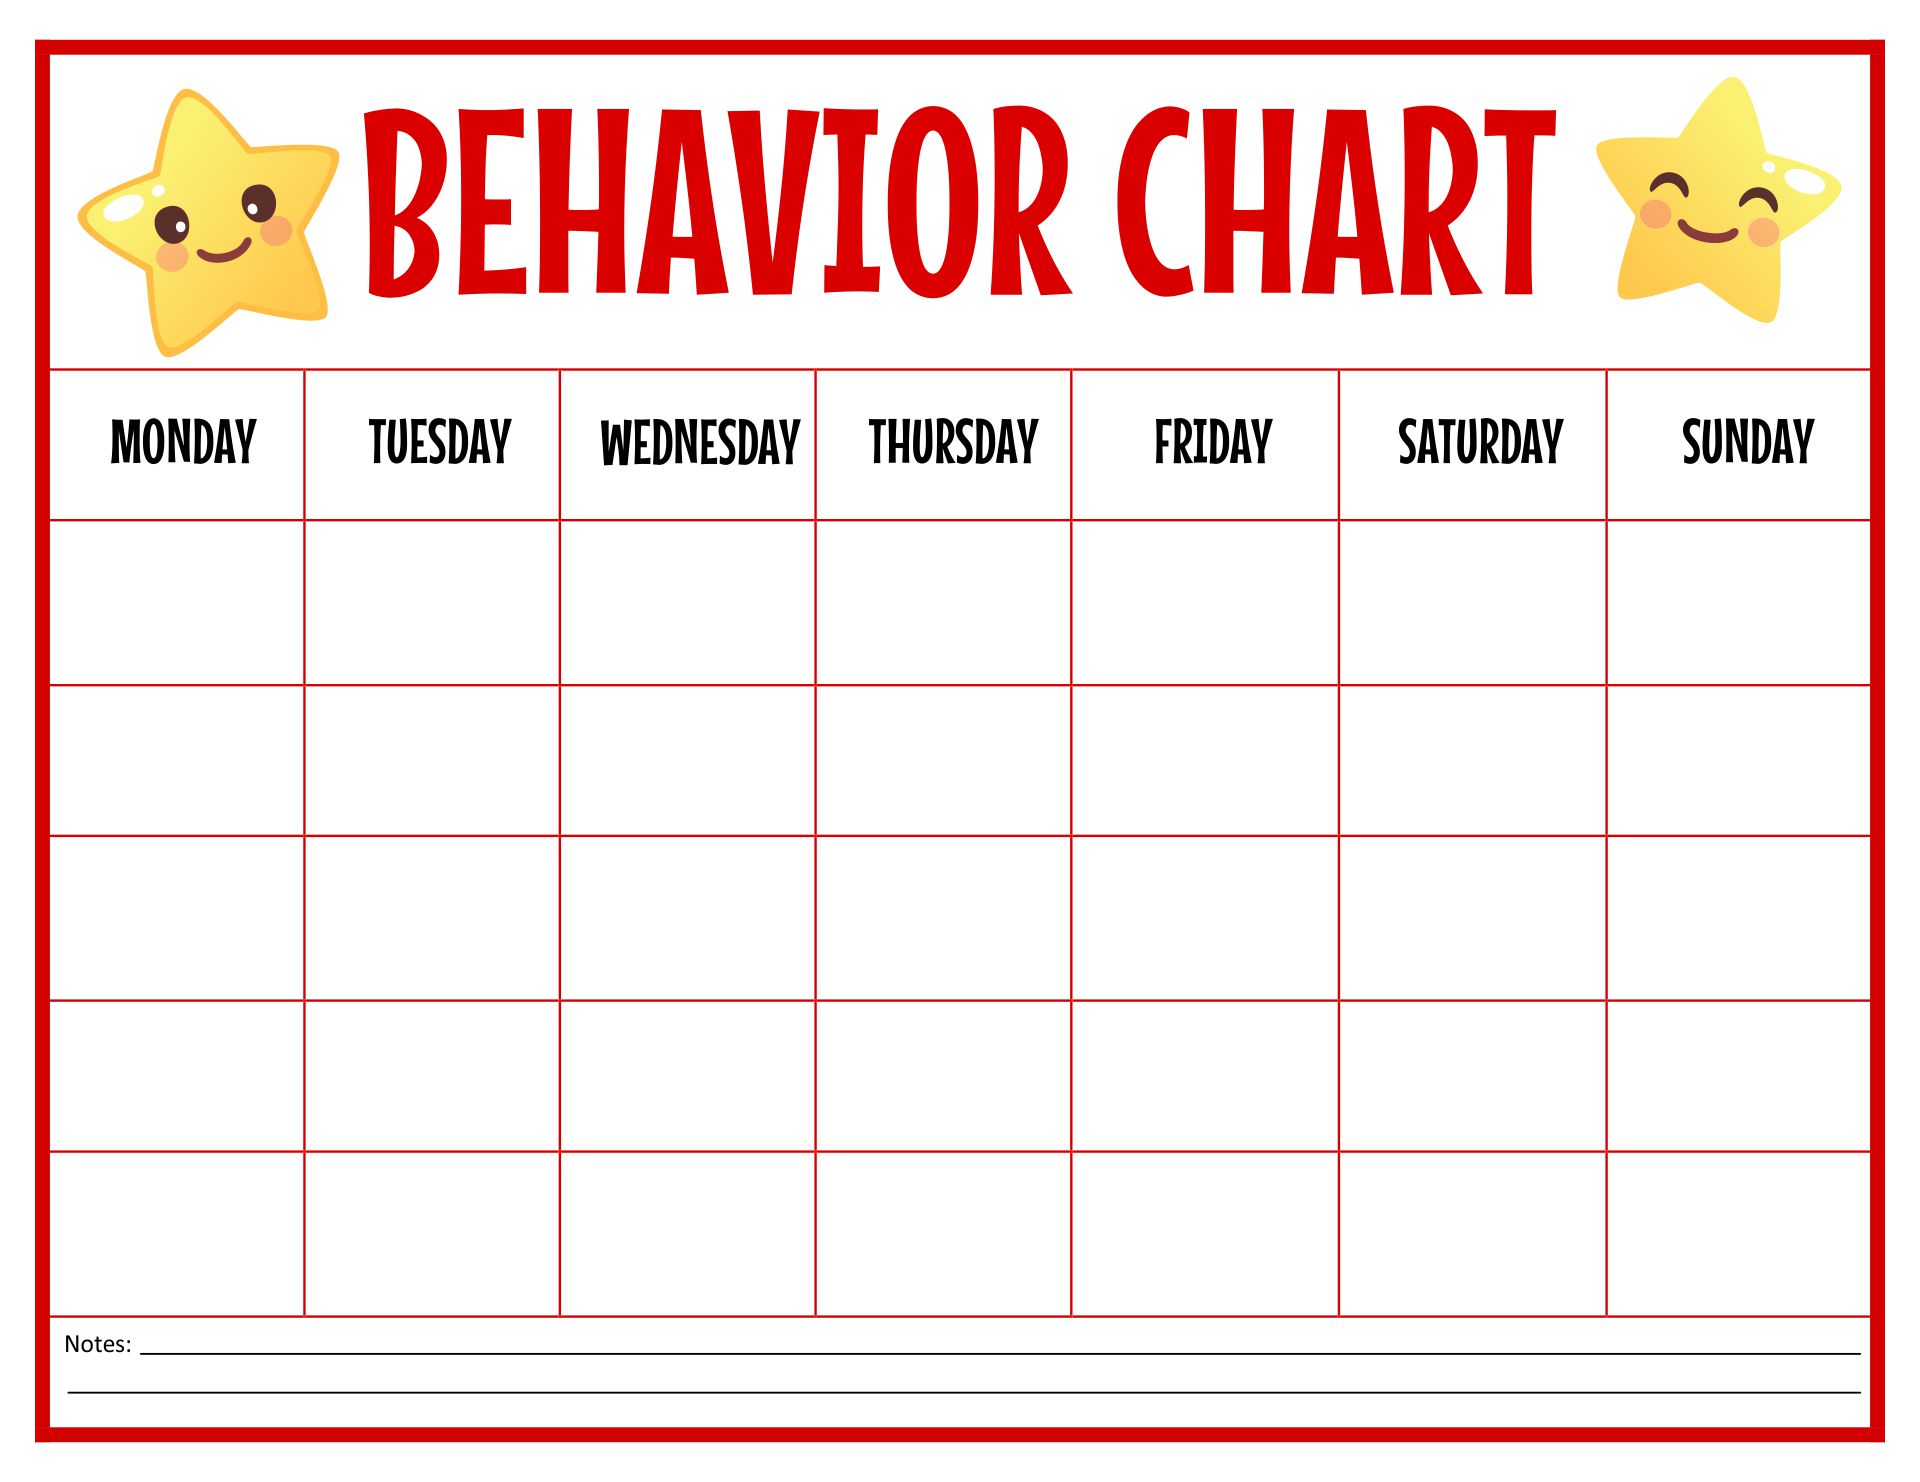 free printable star charts for good behaviour